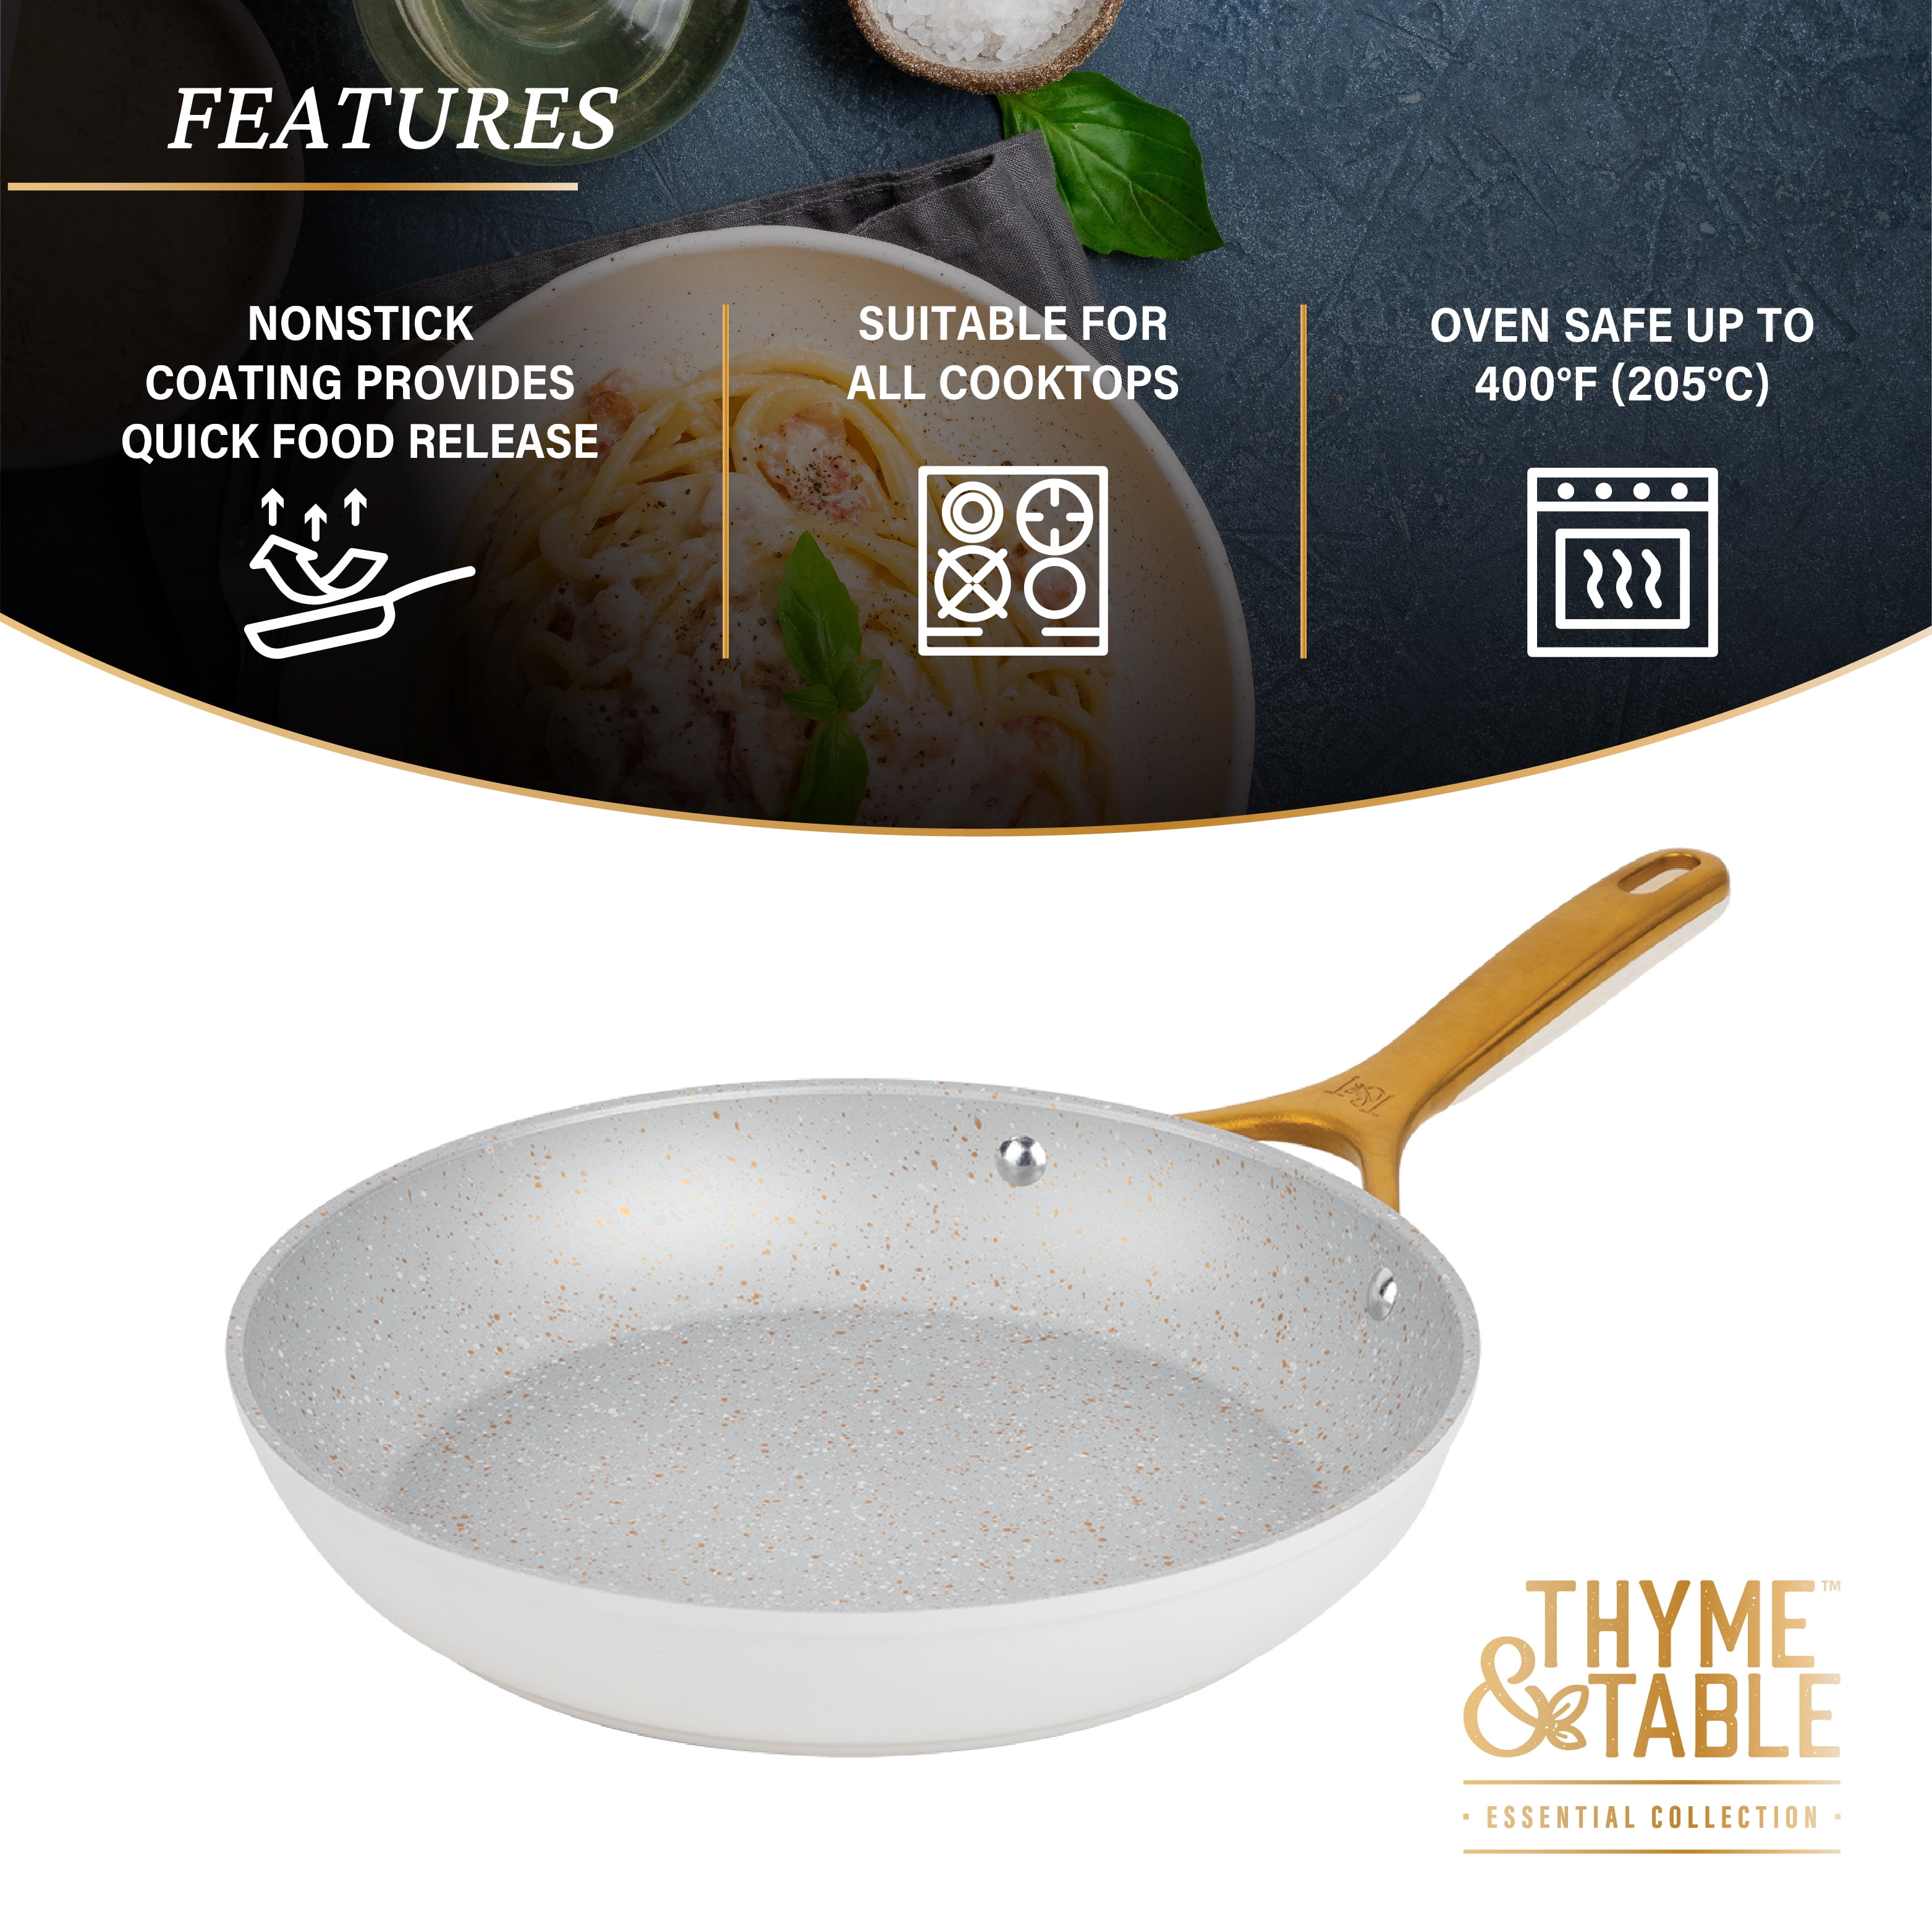 Walmart] YMMV - Thyme & Table 12 piece Cookware set - $39! -  RedFlagDeals.com Forums